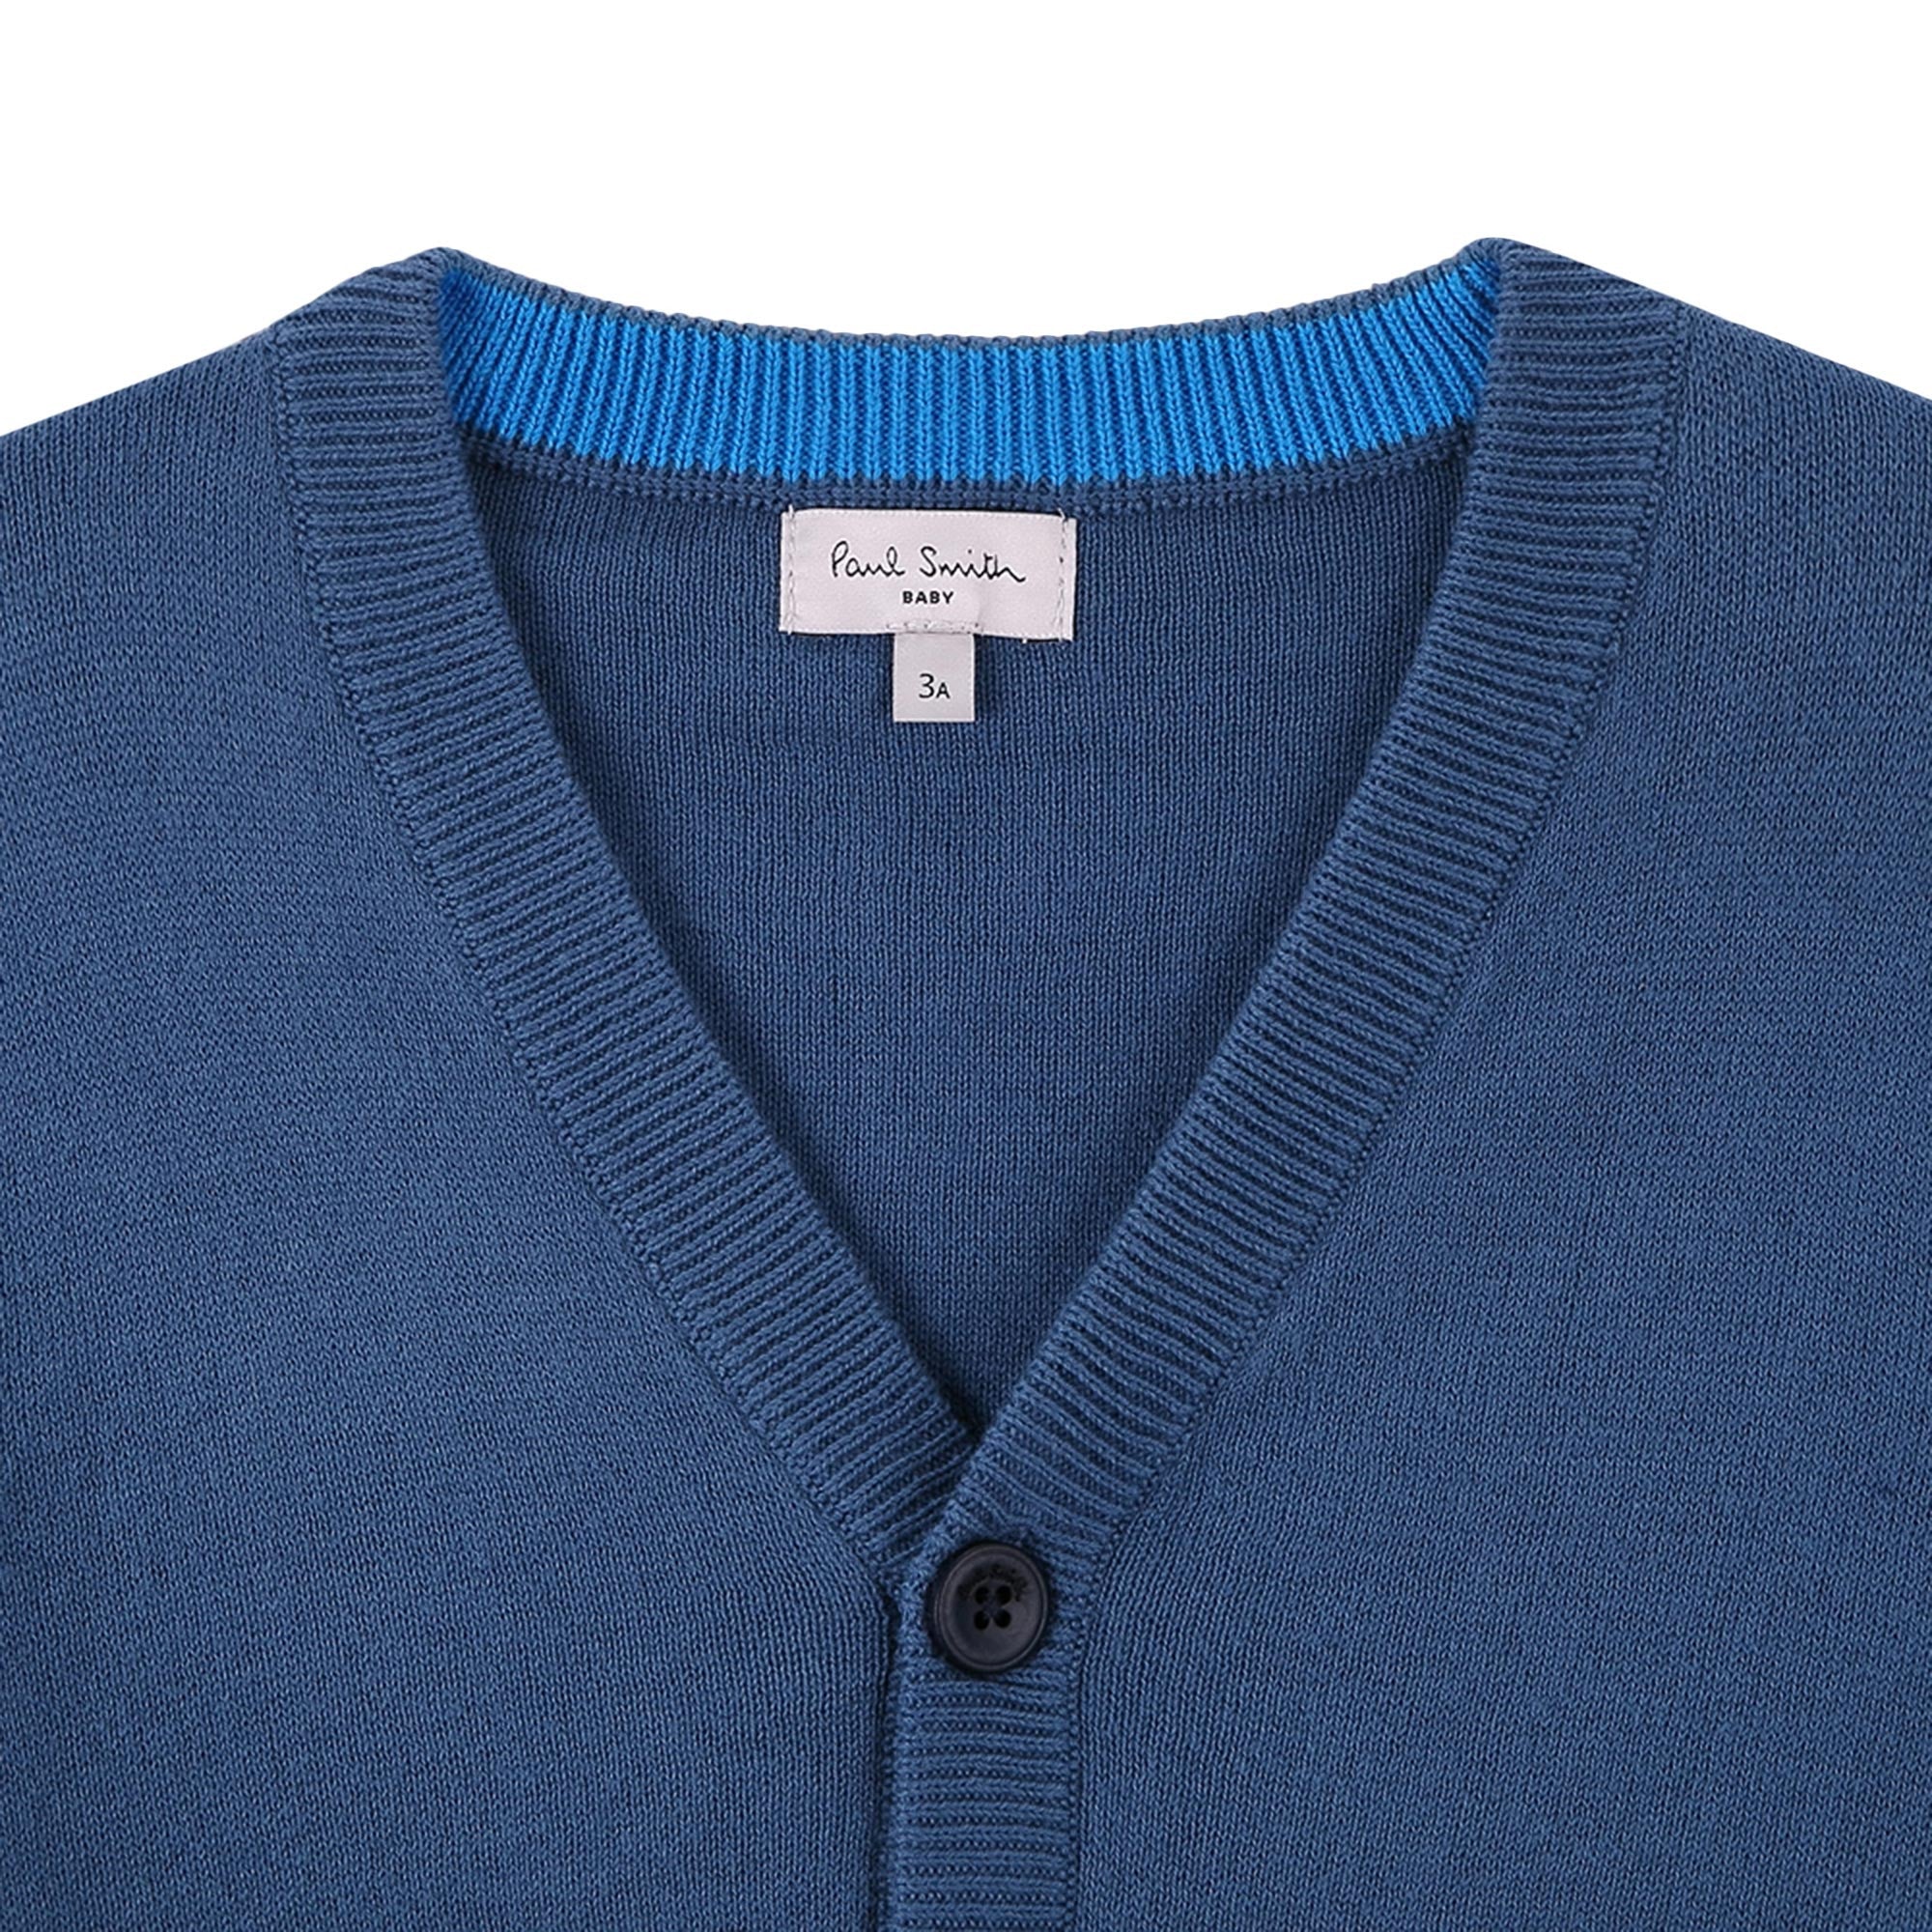 Baby Boys Light Petrol Blue Knitted Cotton Cardigan - CÉMAROSE | Children's Fashion Store - 4